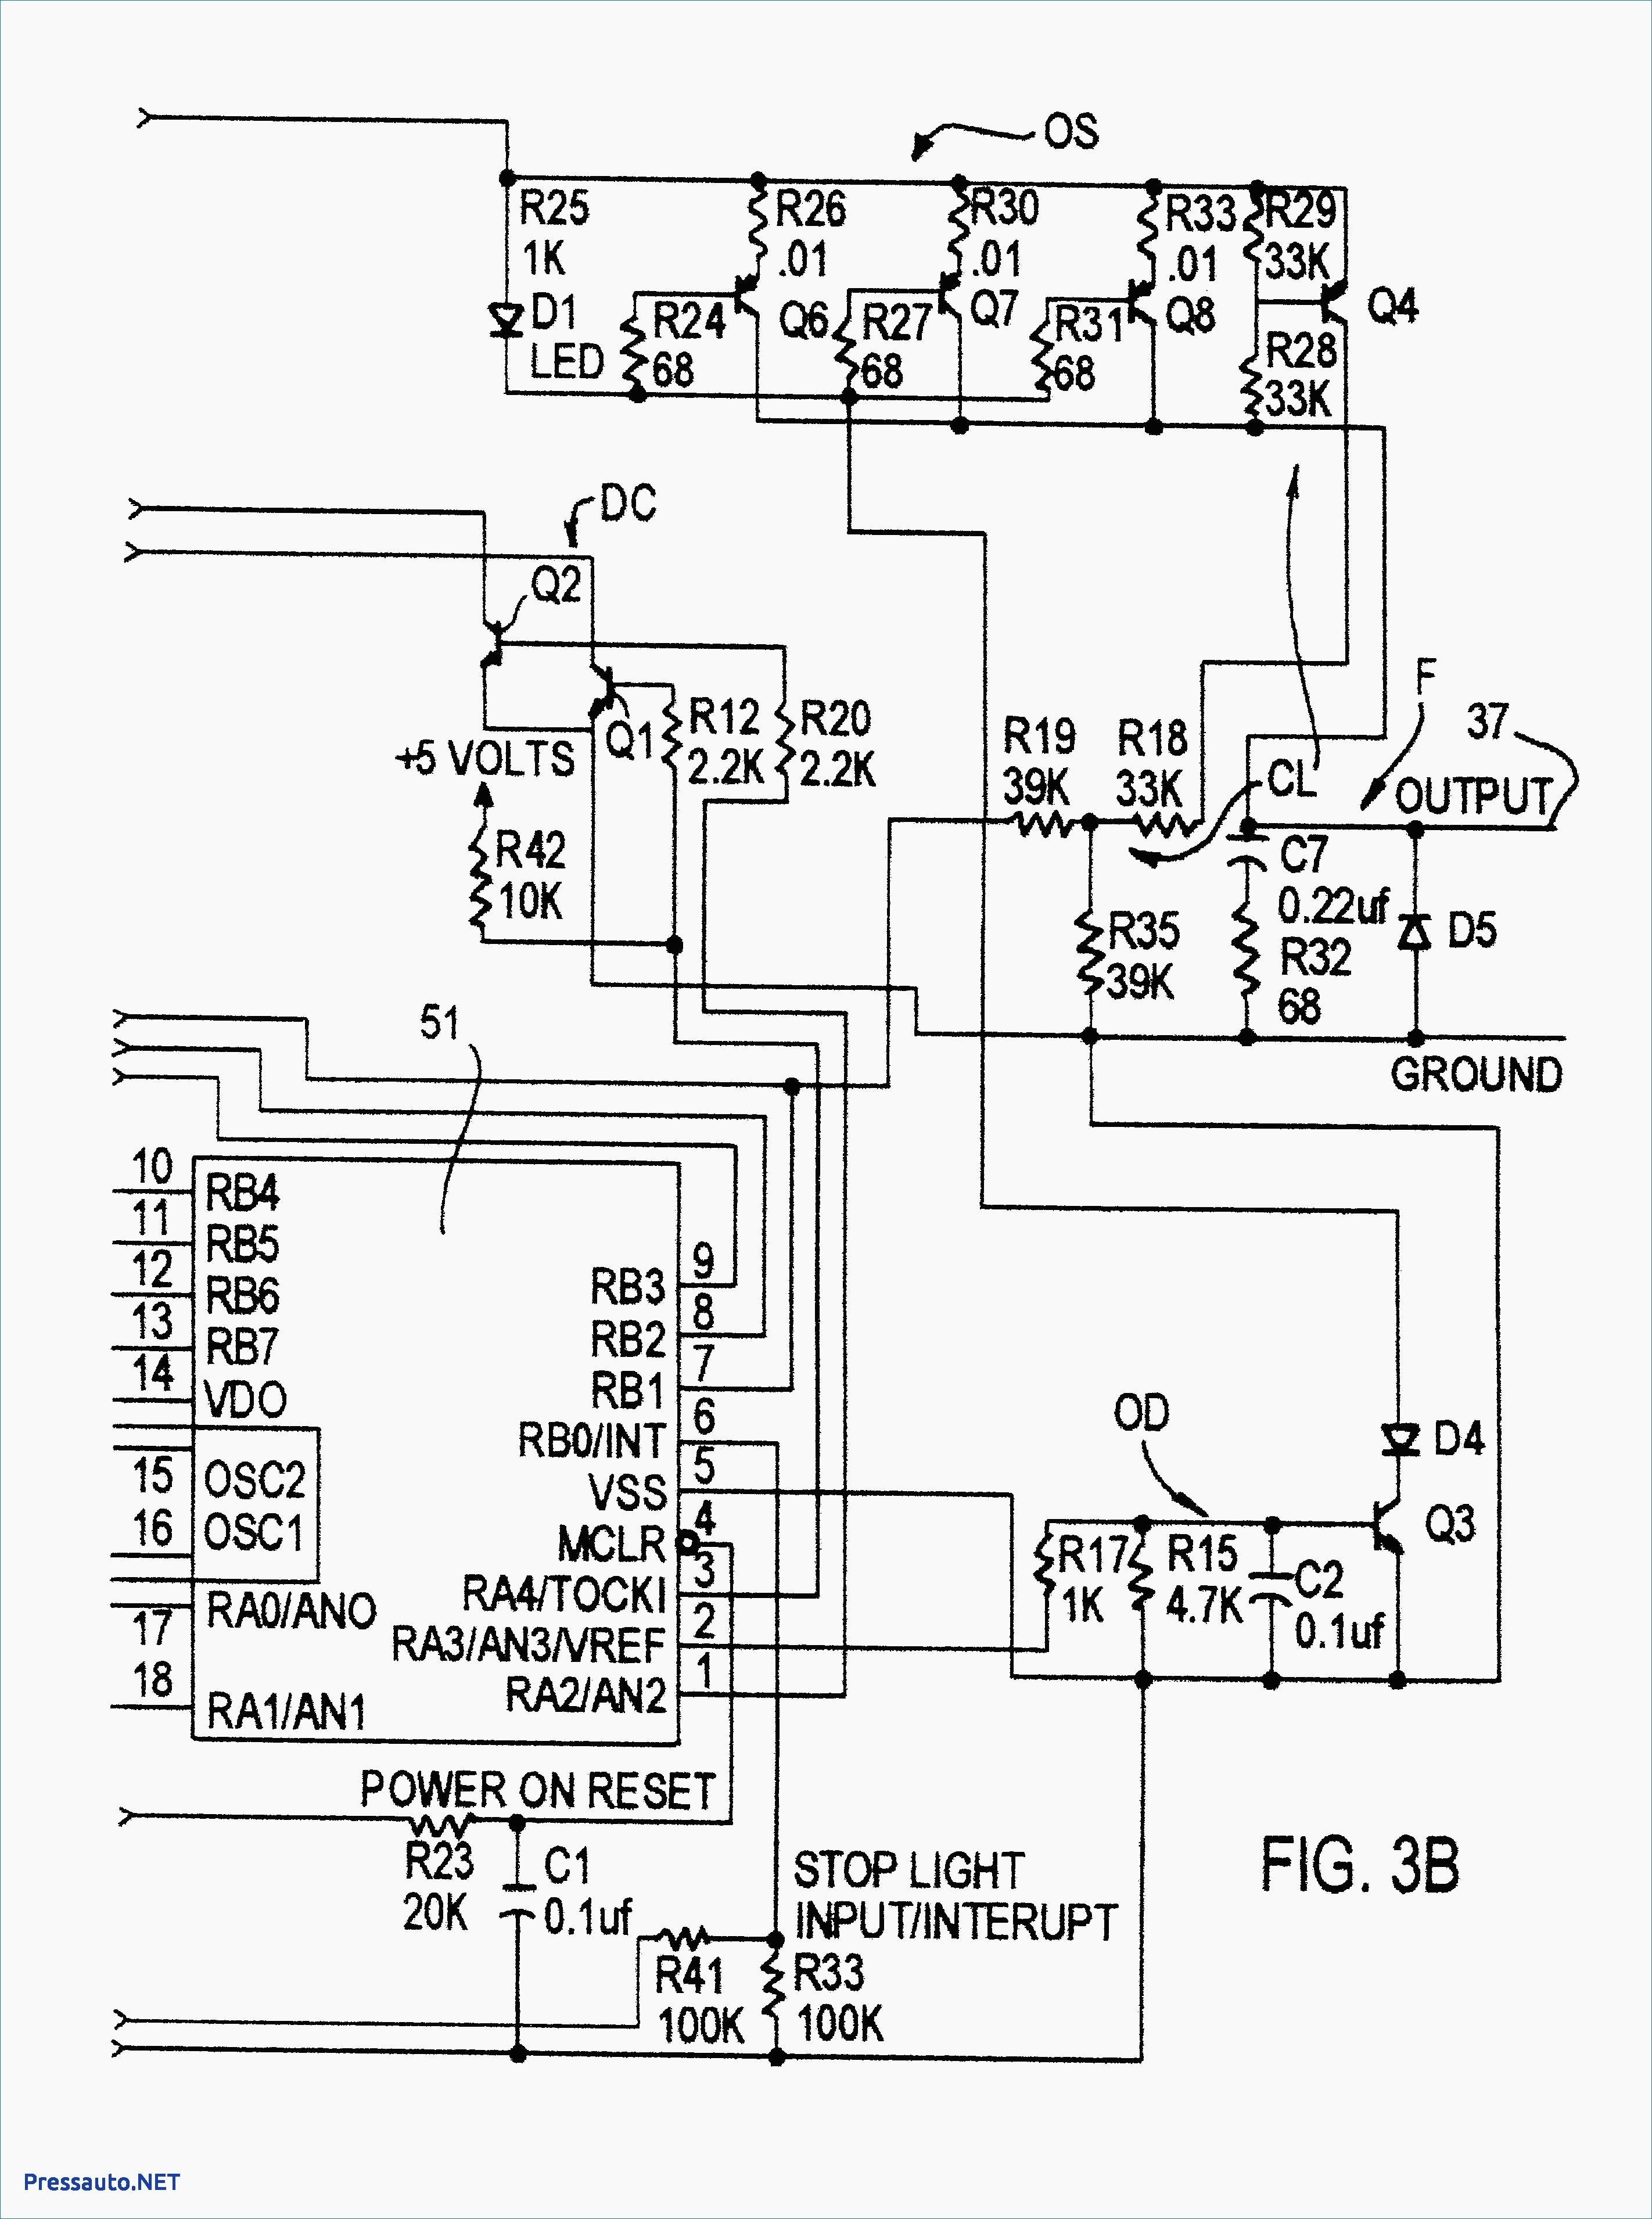 4 Wire 240 Volt Receptacle Wiring Diagram Auto